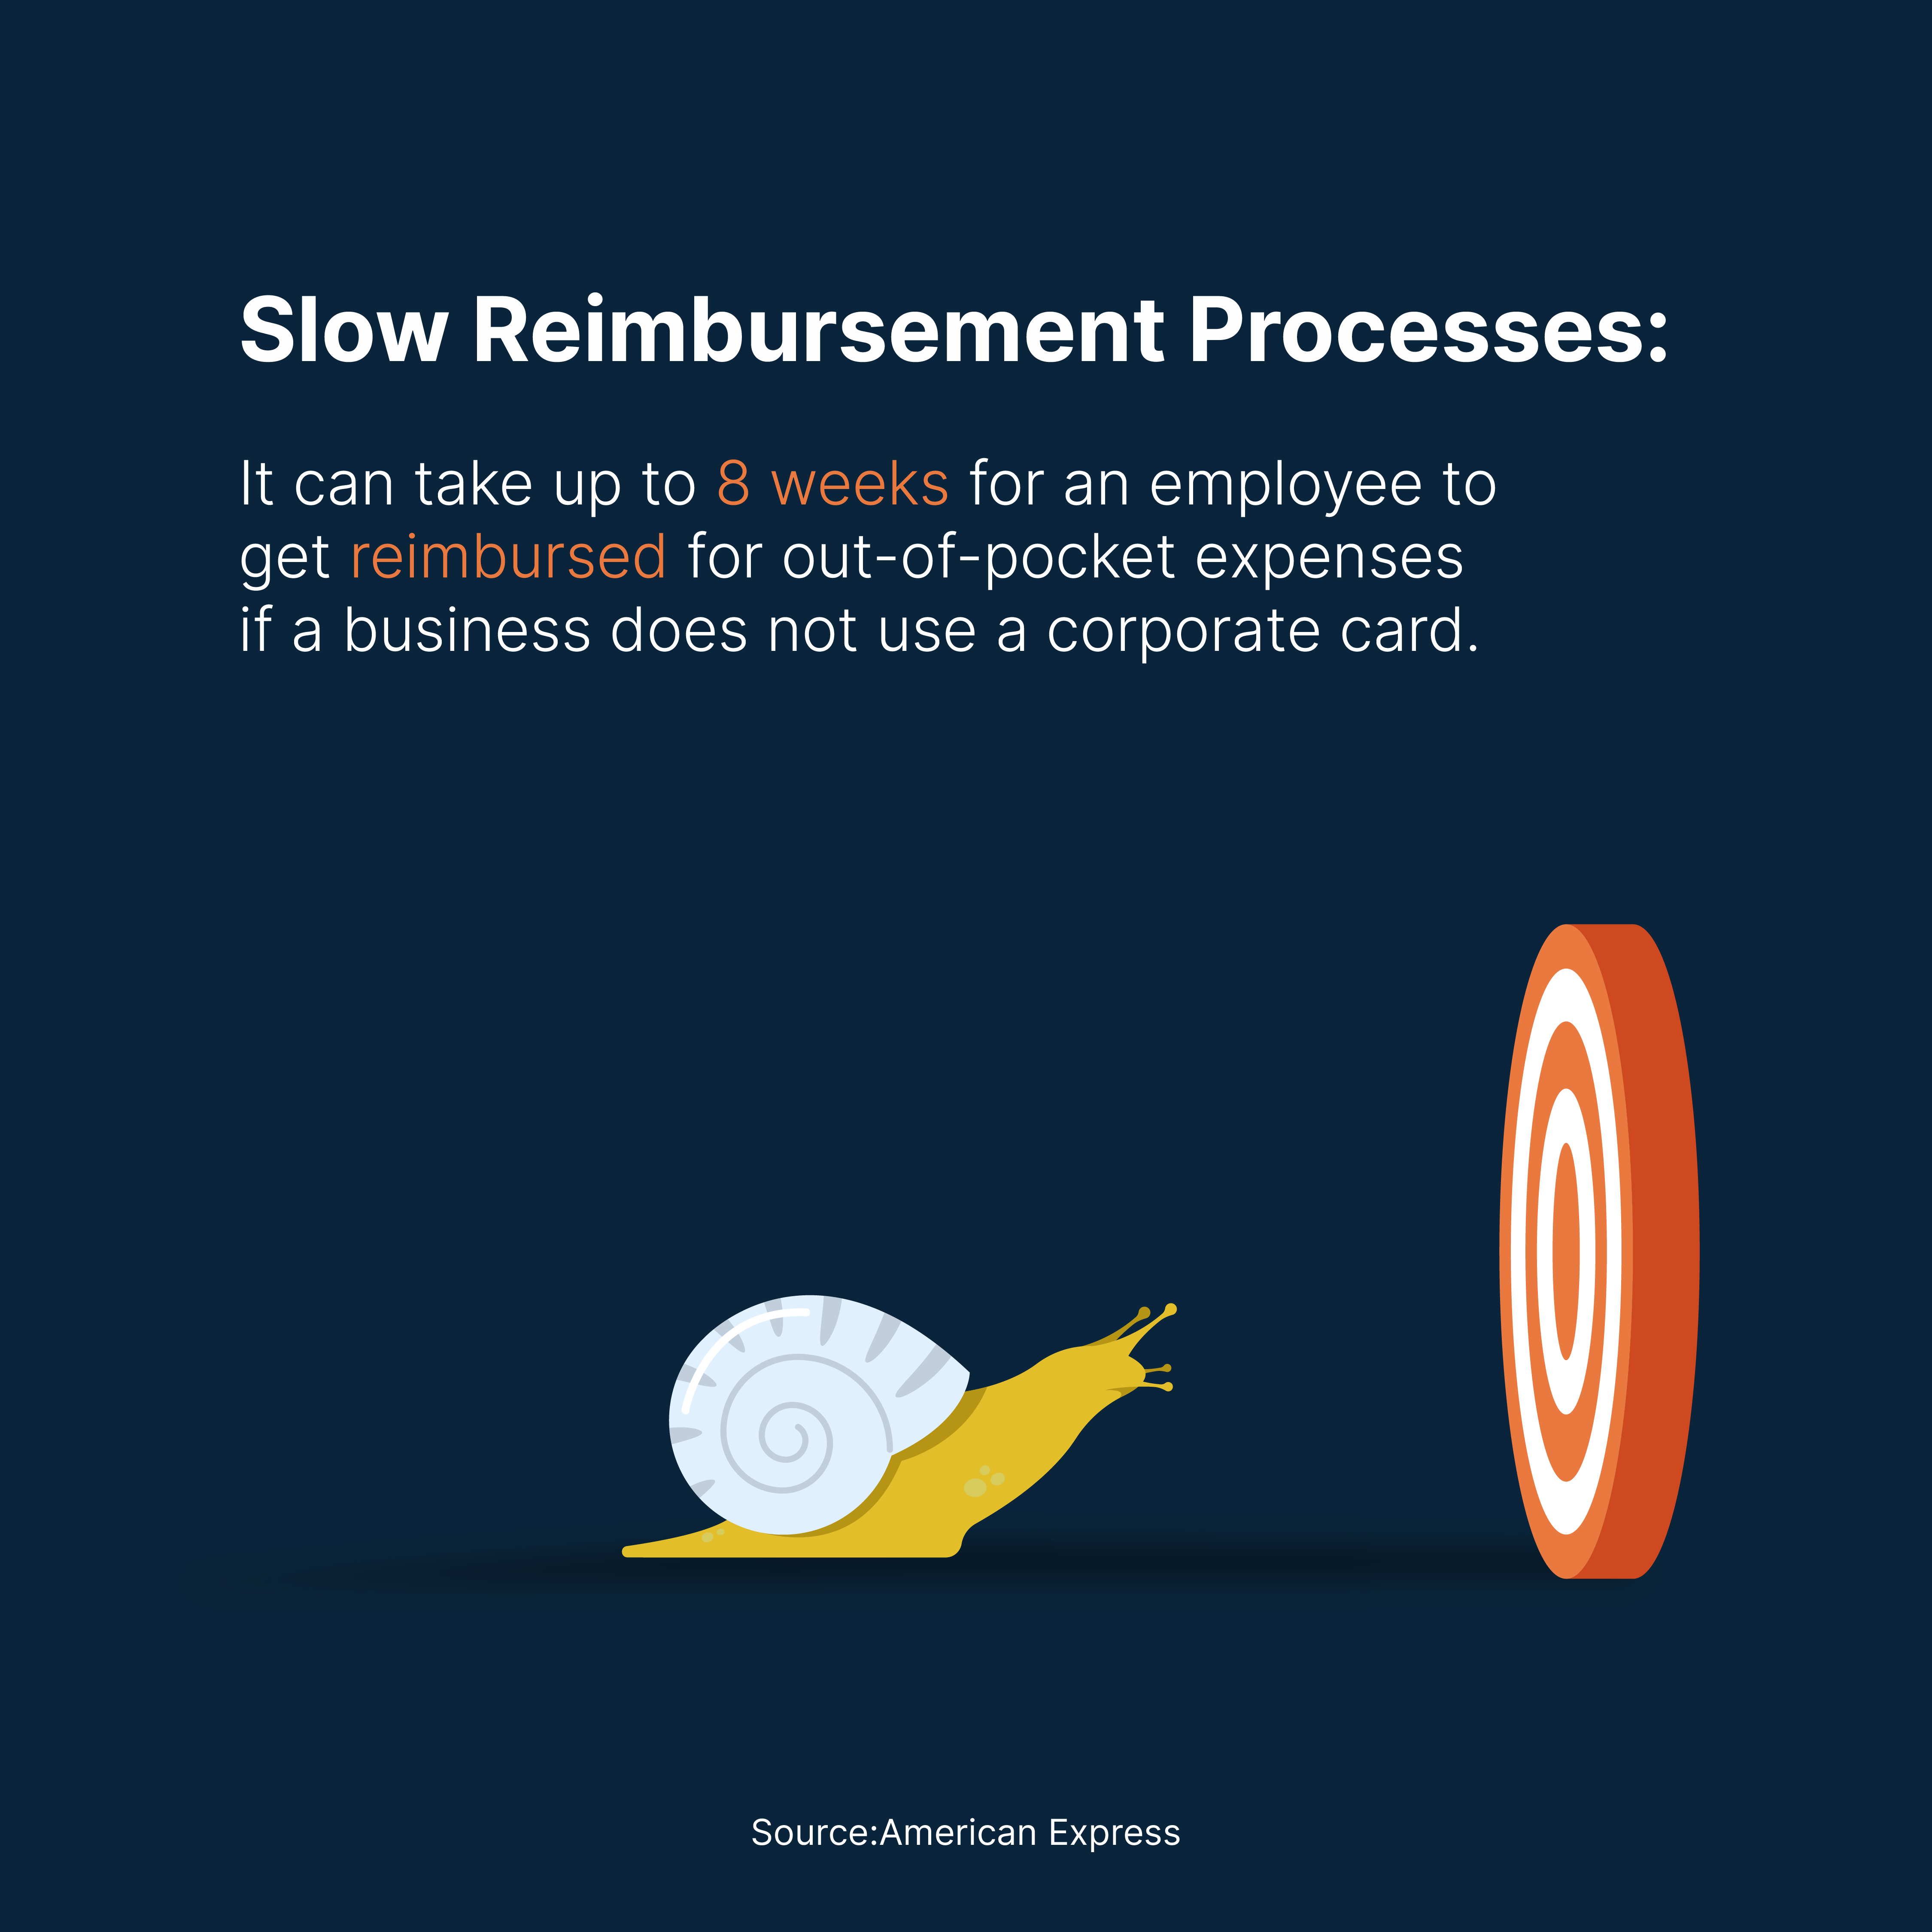 Slow reimbursement processes